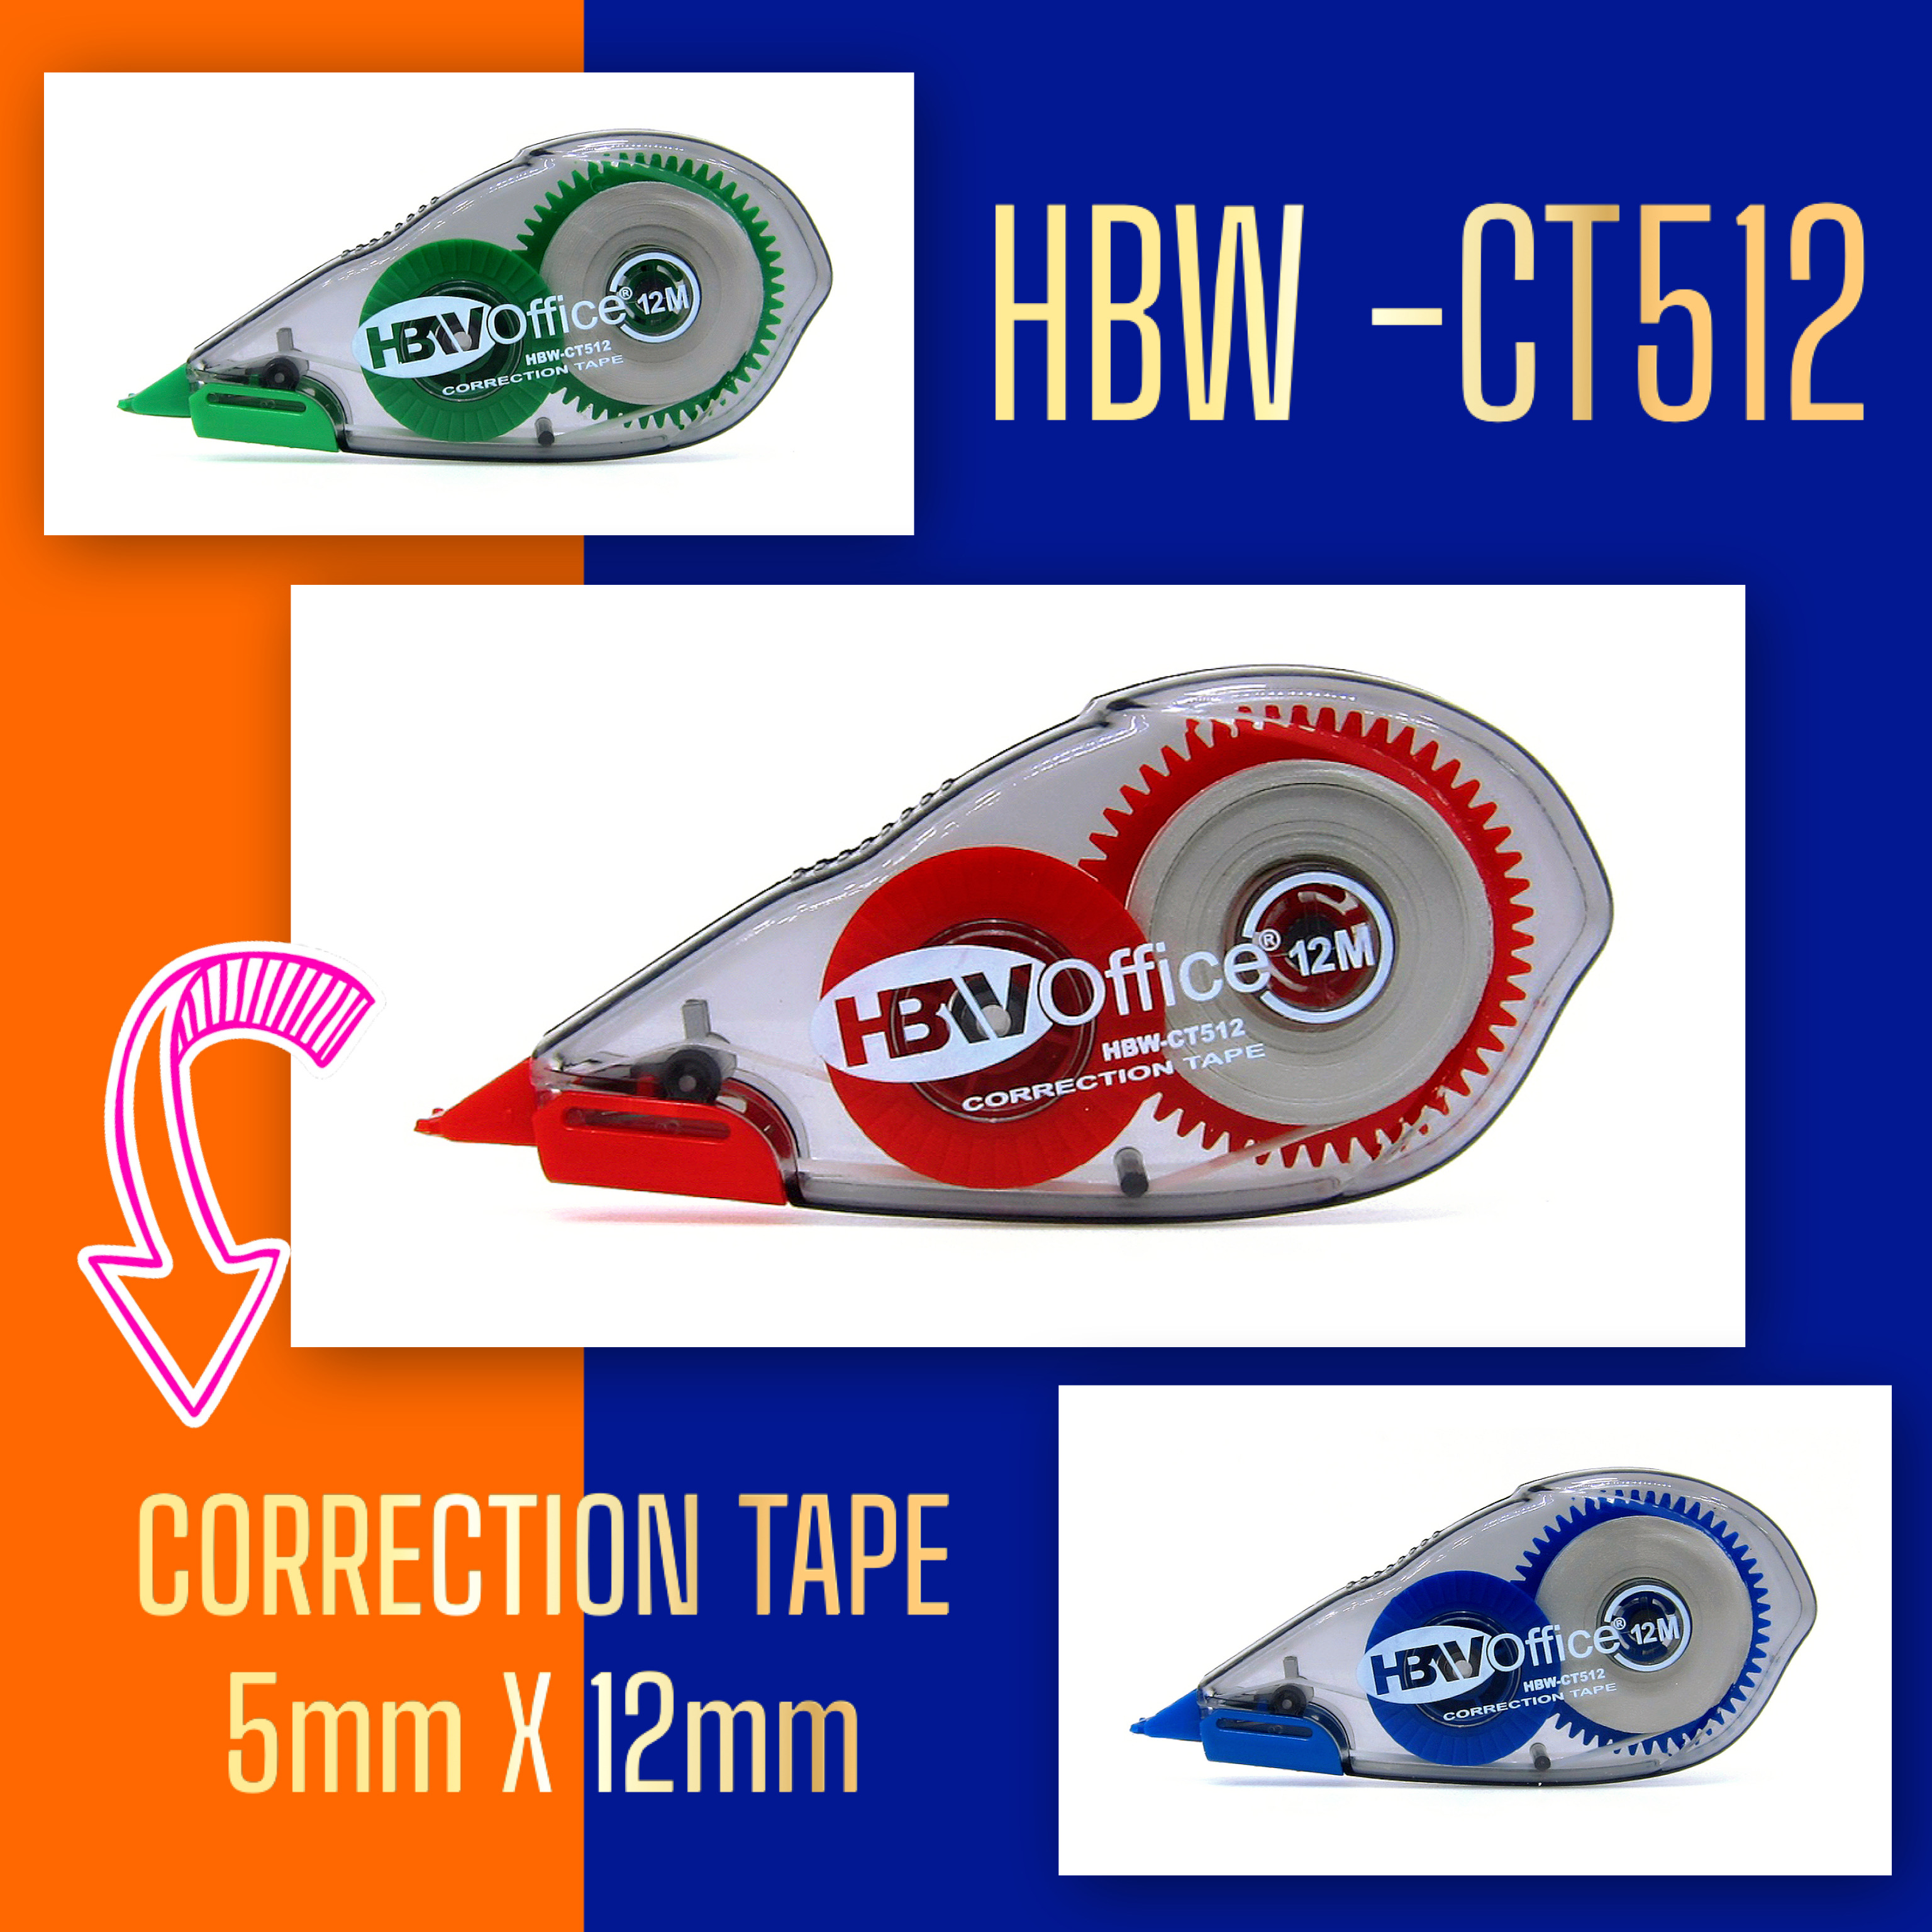 HBW Correction Tape 5mmx8m CT508 - HBW